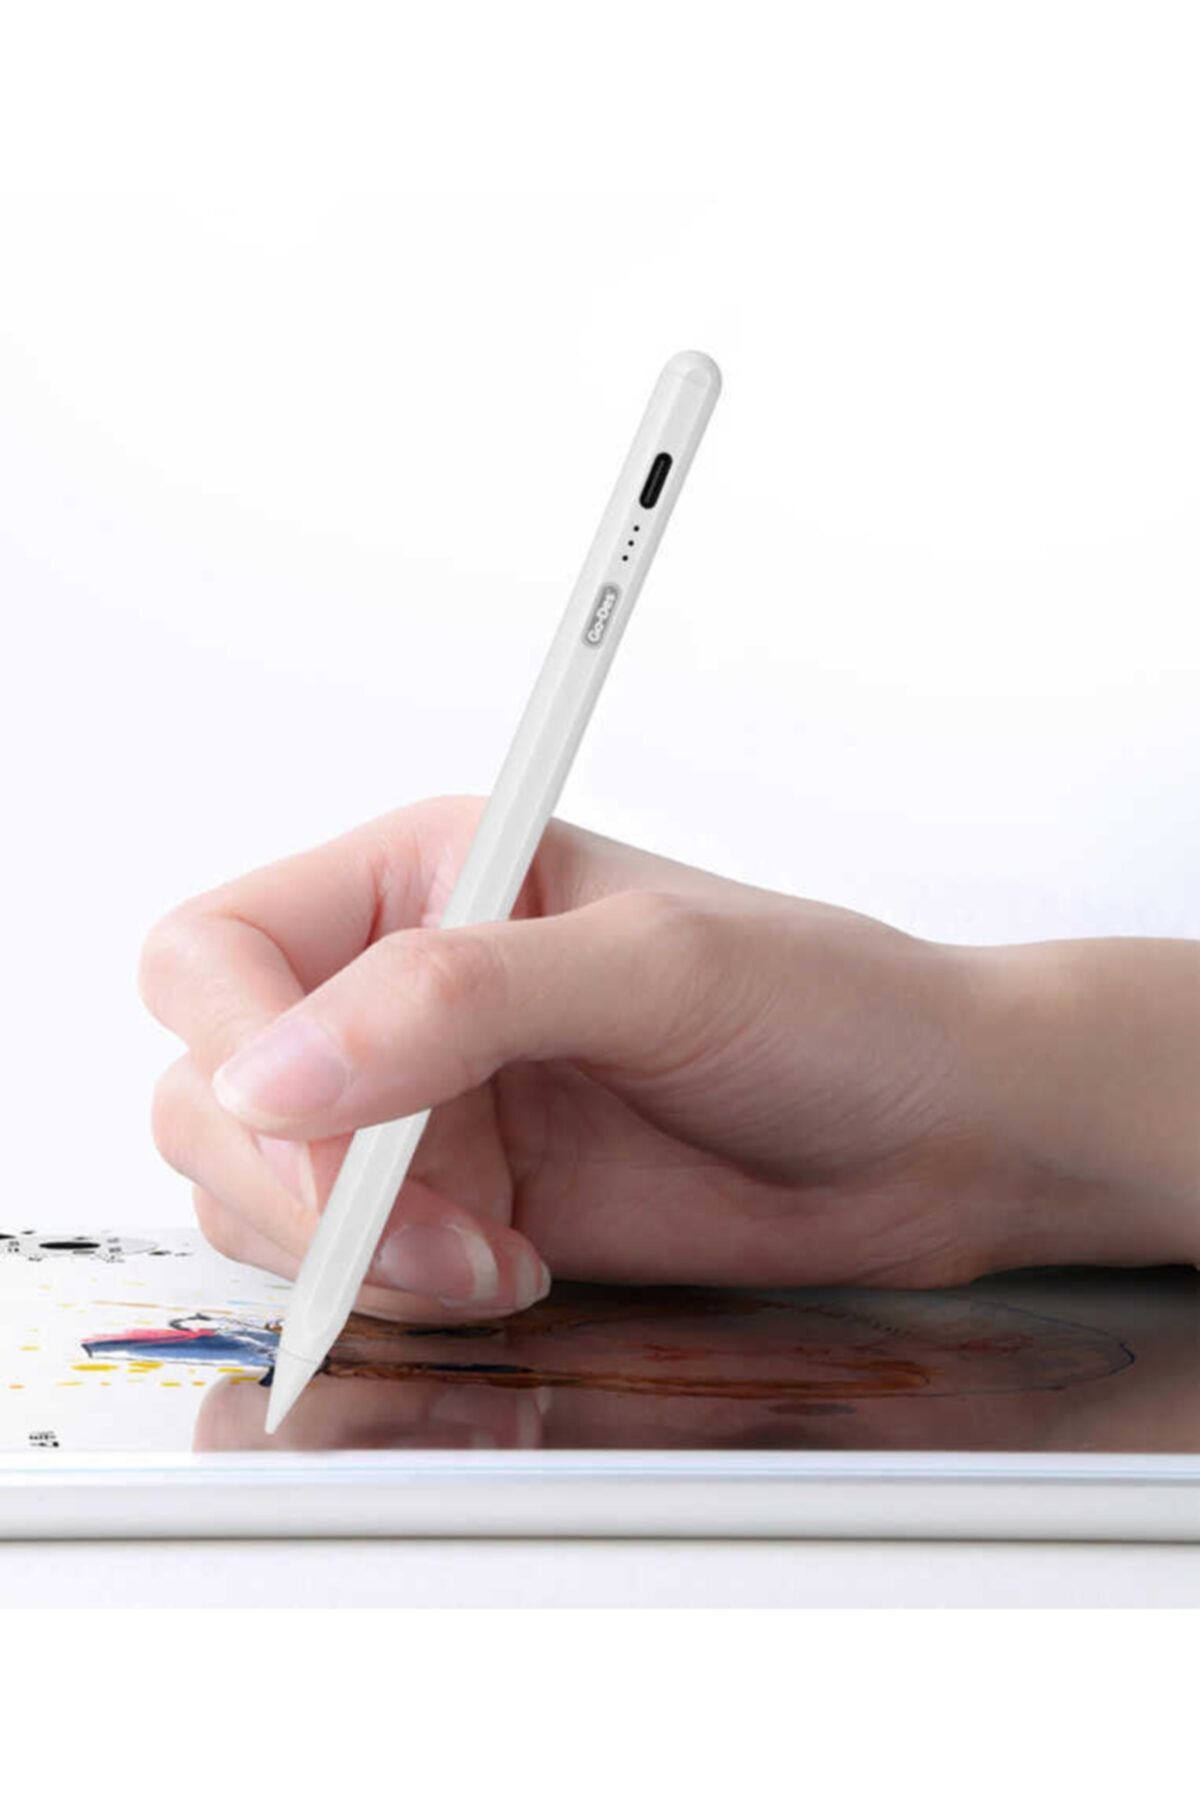 HopyKent Ipad Mini 6 Dokunmatik Kalem Hassas Çizim Ve Not Tutmak Için Palm Rejection Özellikli